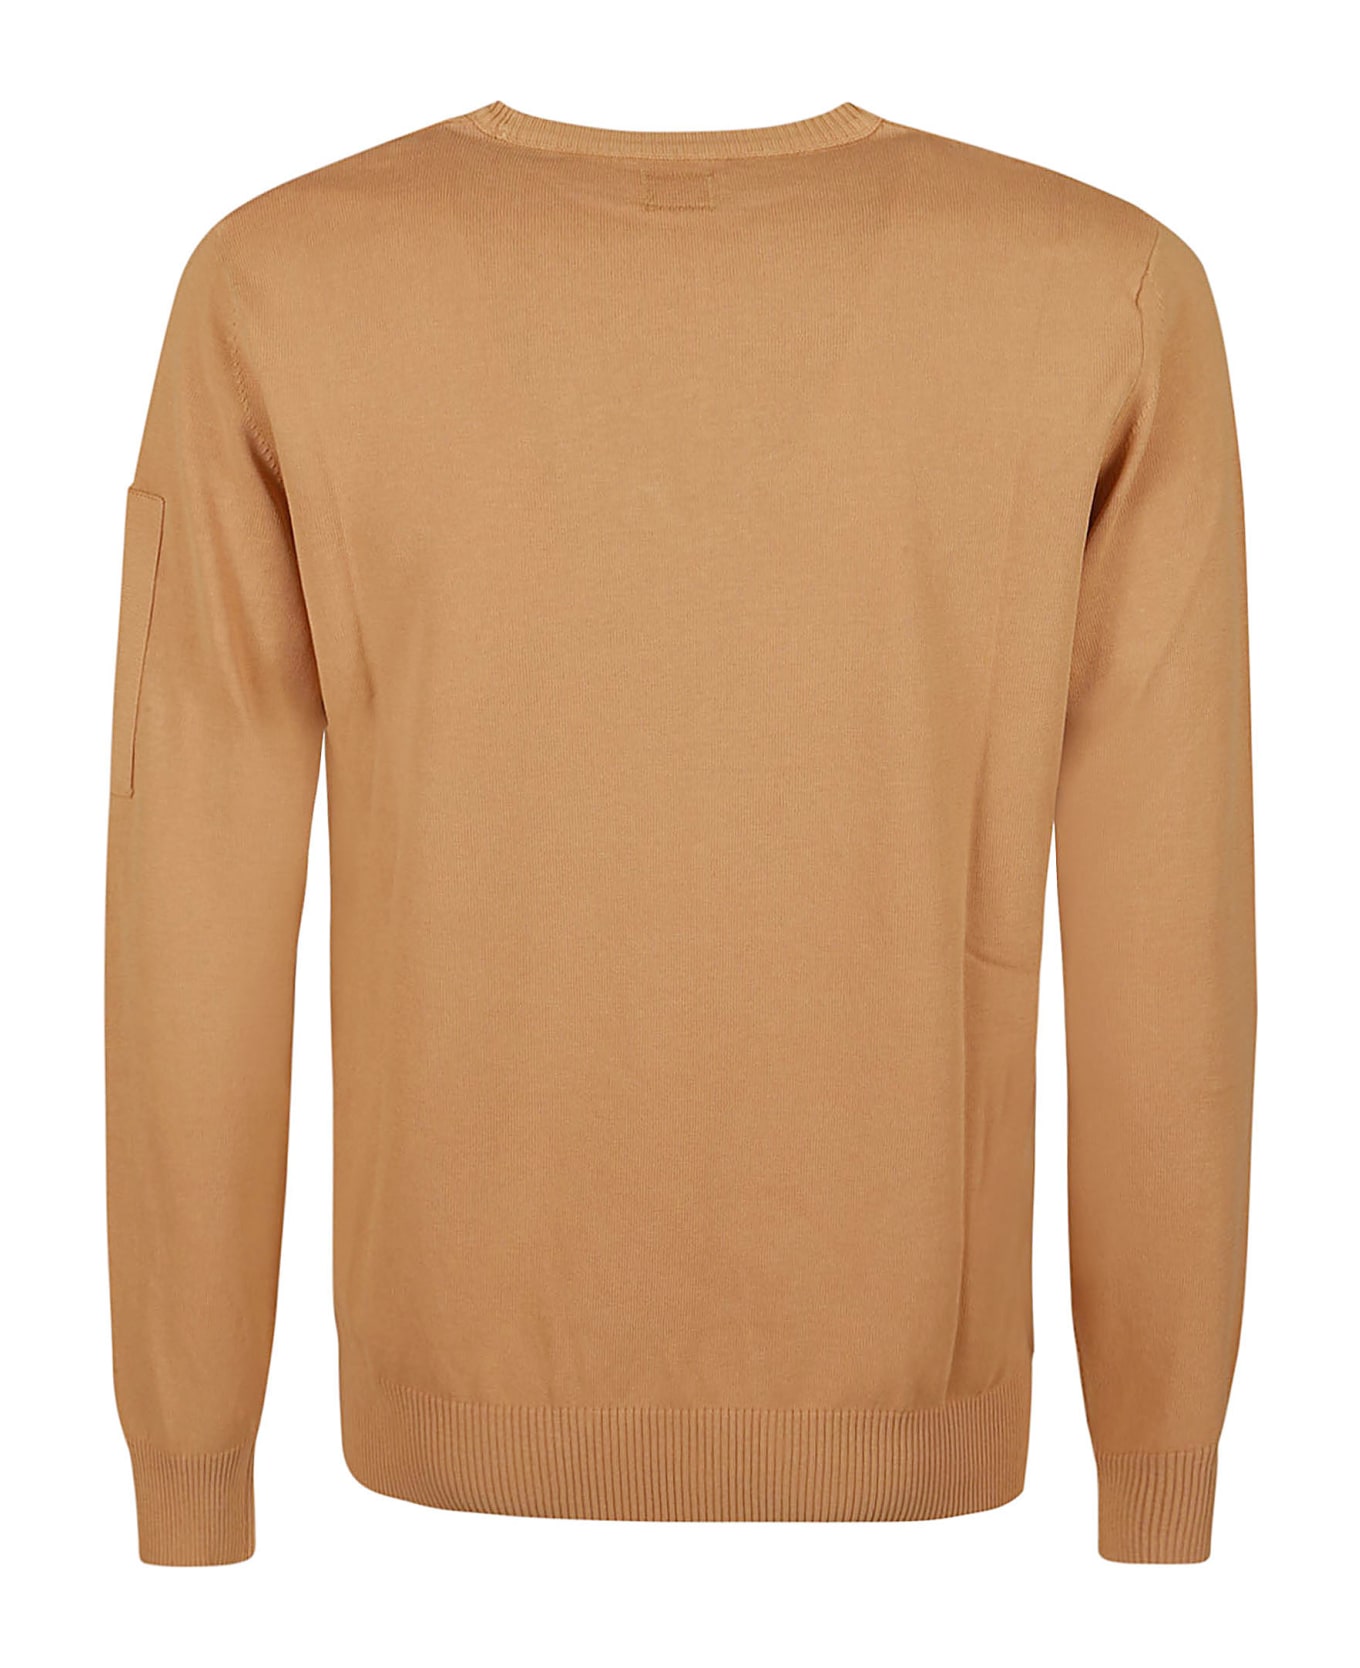 C.P. Company Old Dyed Crepe Sweatshirt - Brown ニットウェア